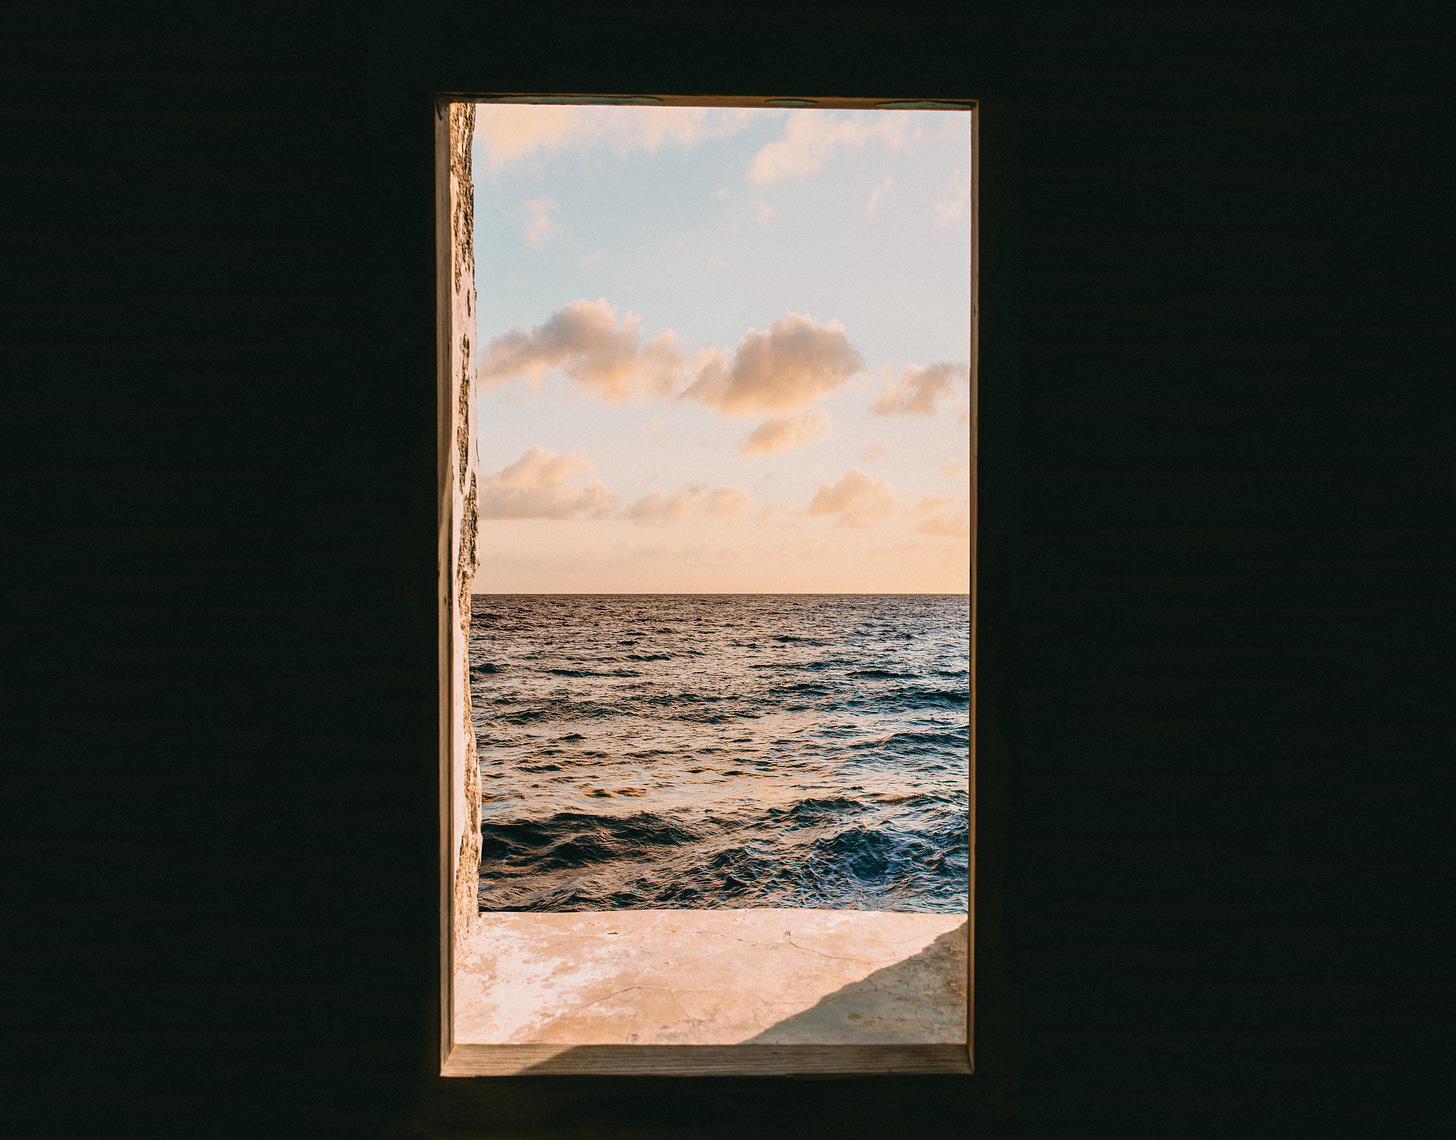 the sea and sky through a rectangular opening